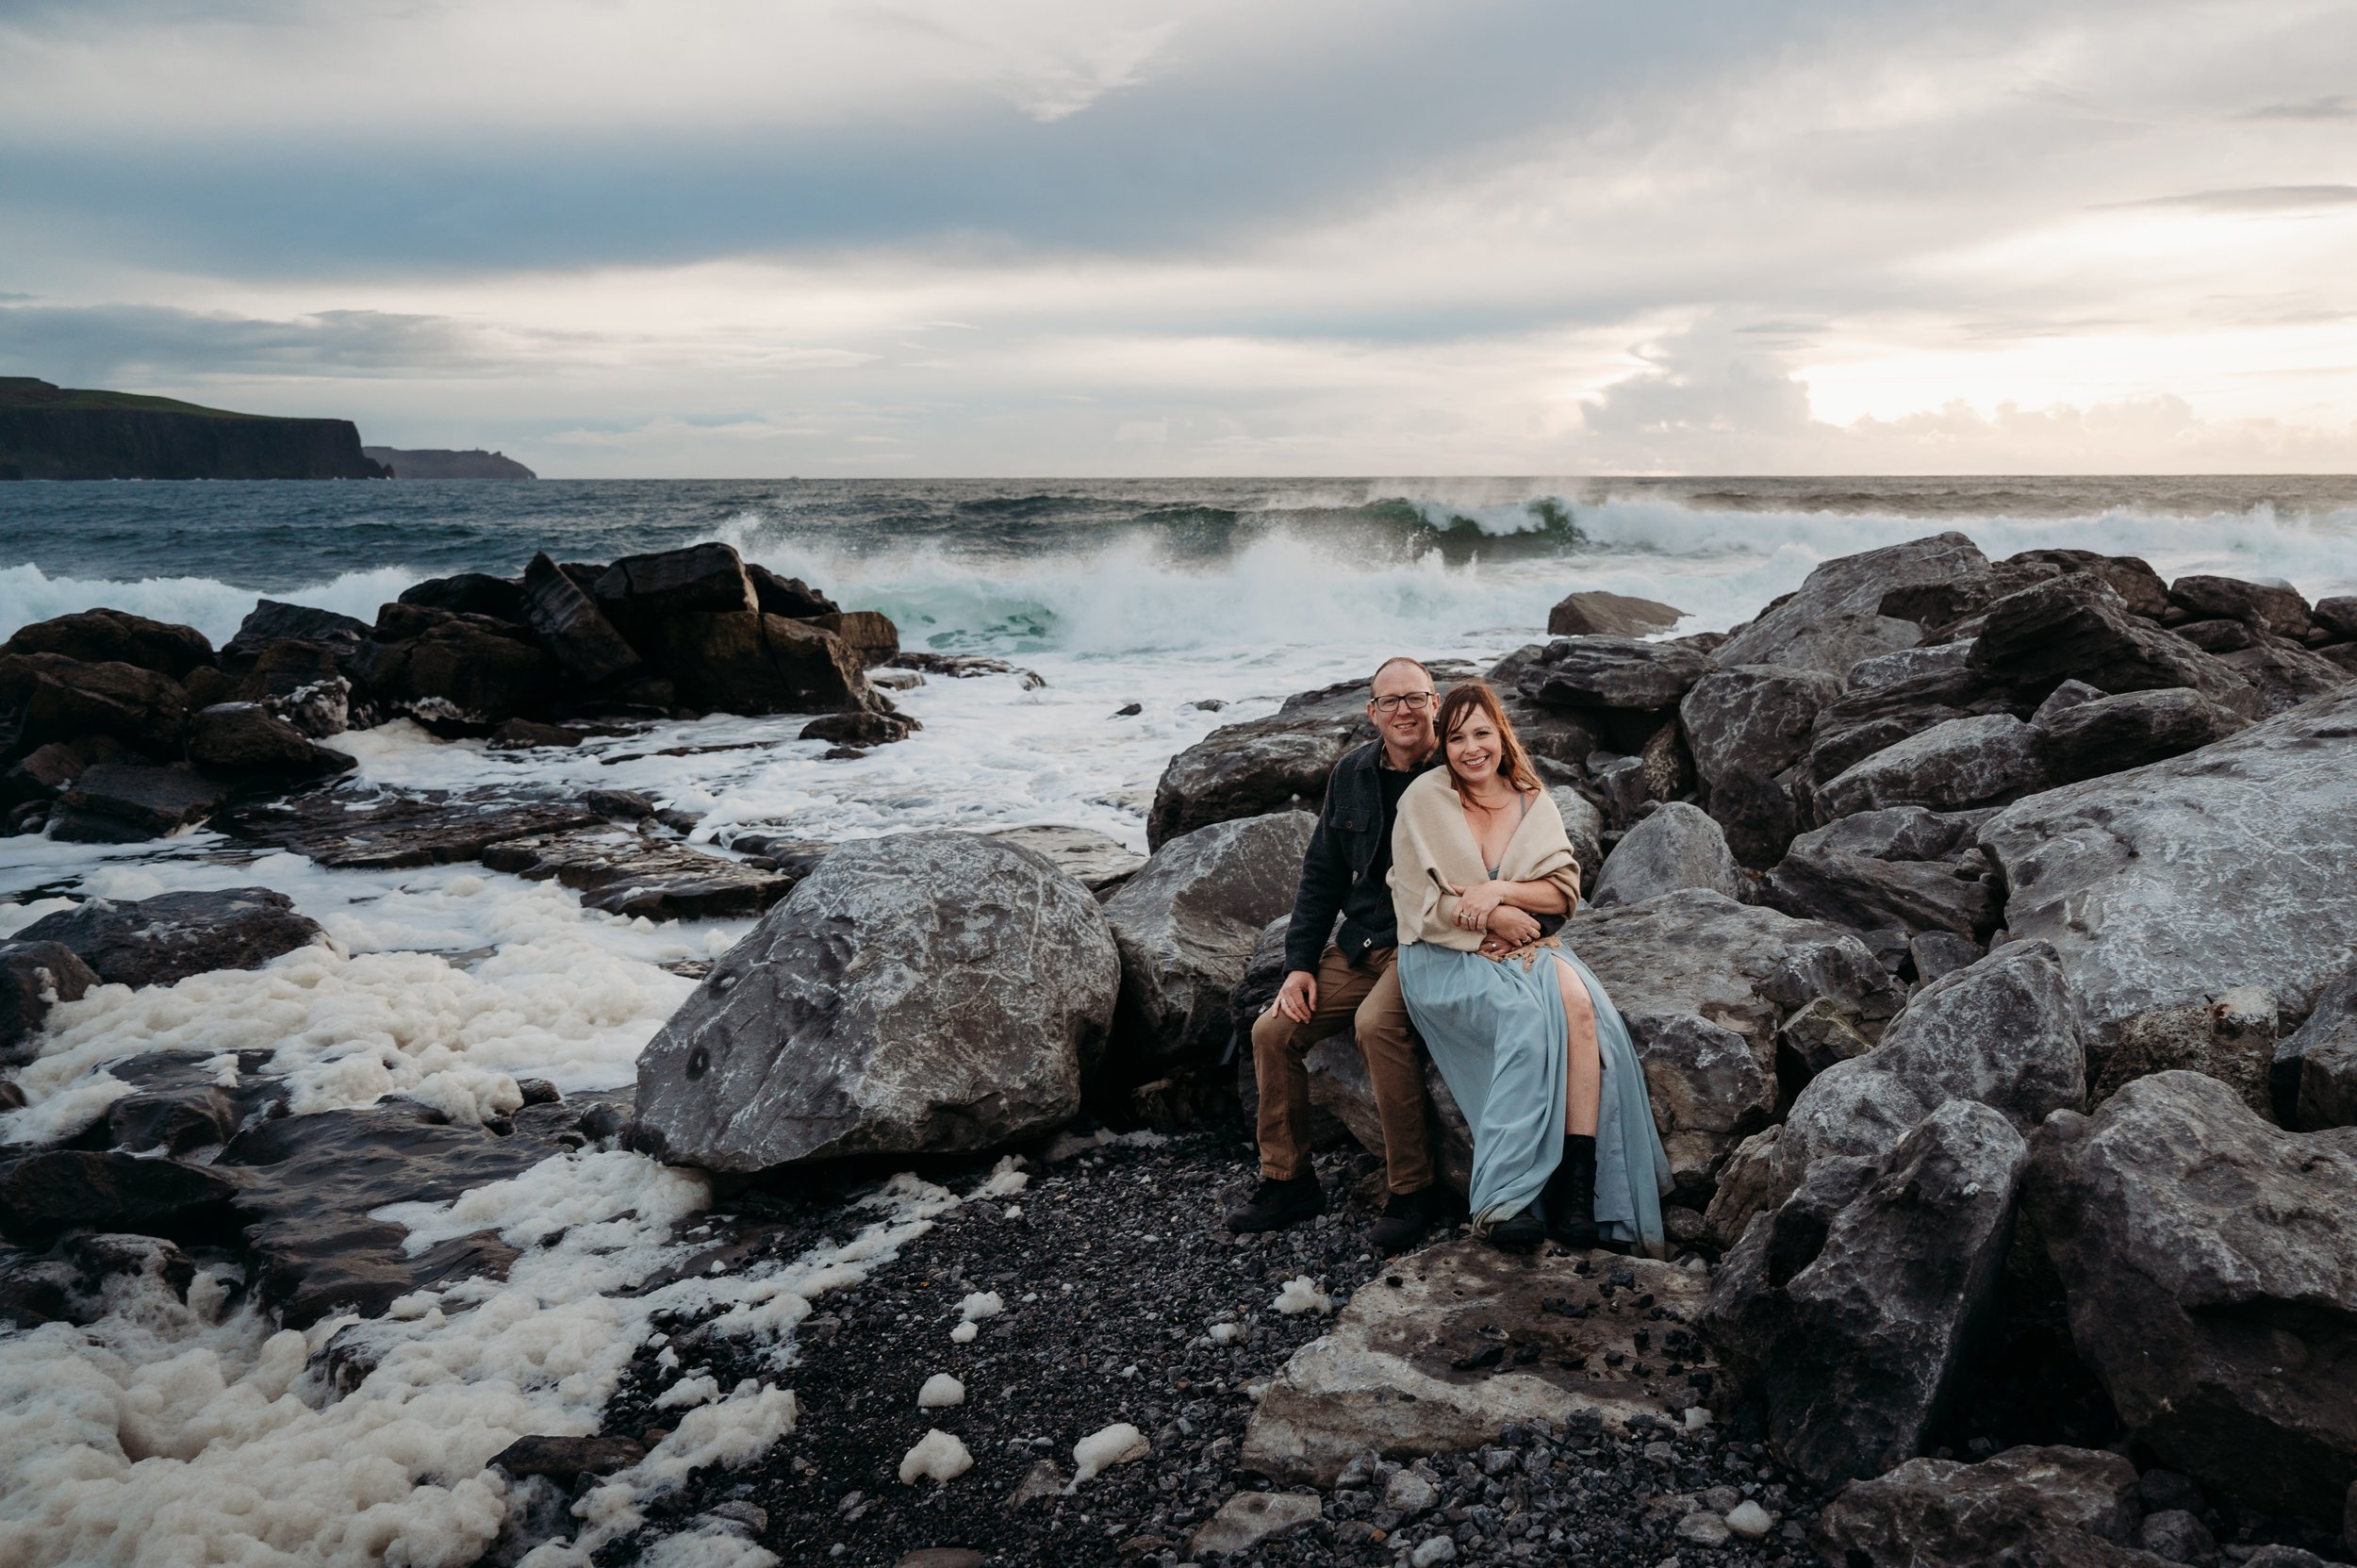 Marie O'Mahony photographer Doolin pier anniversary couples photo session sitting near the waves